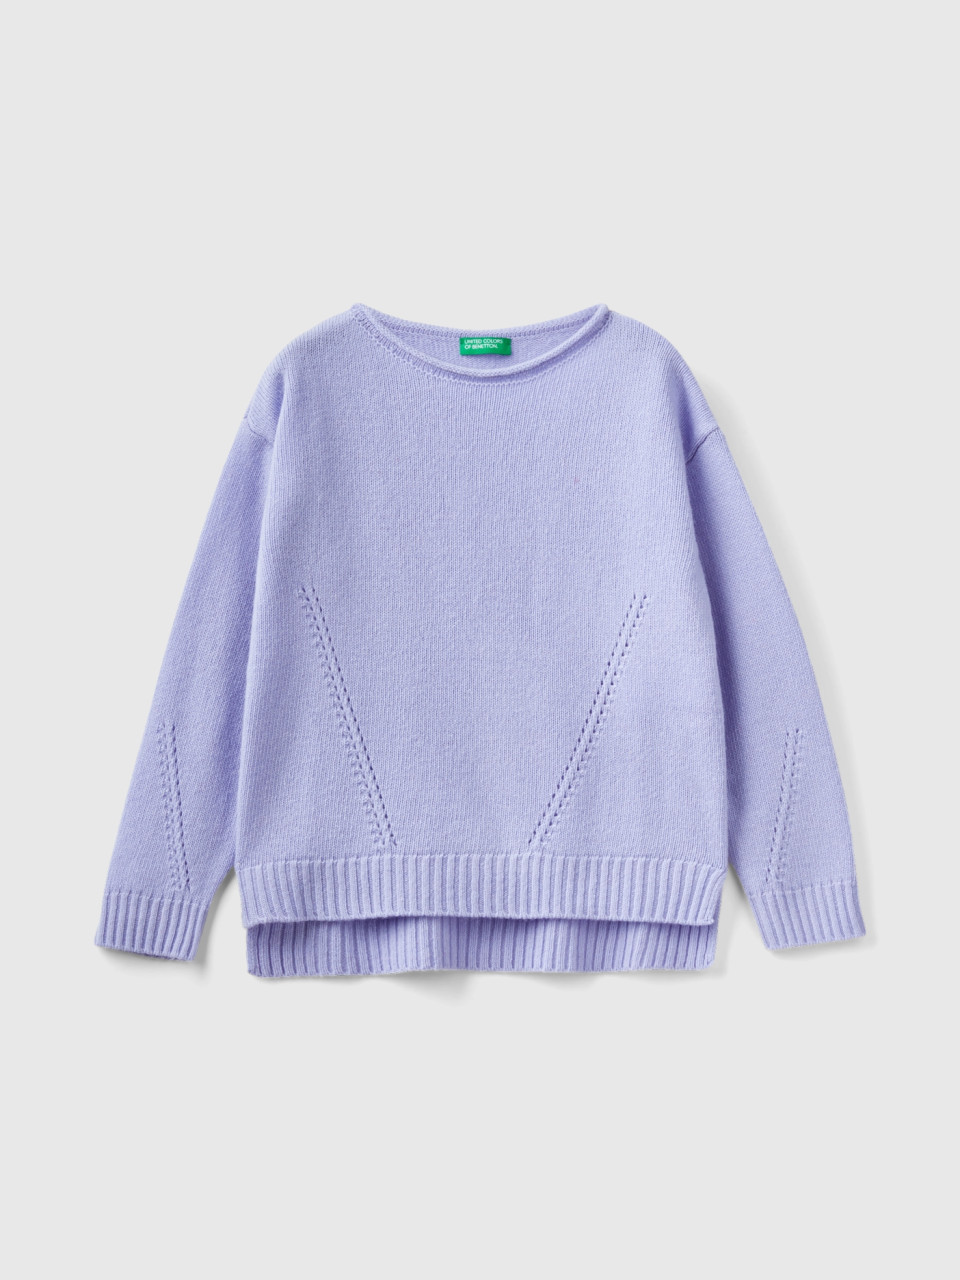 Benetton, Knit Sweater With Playful Stitching, Lilac, Kids